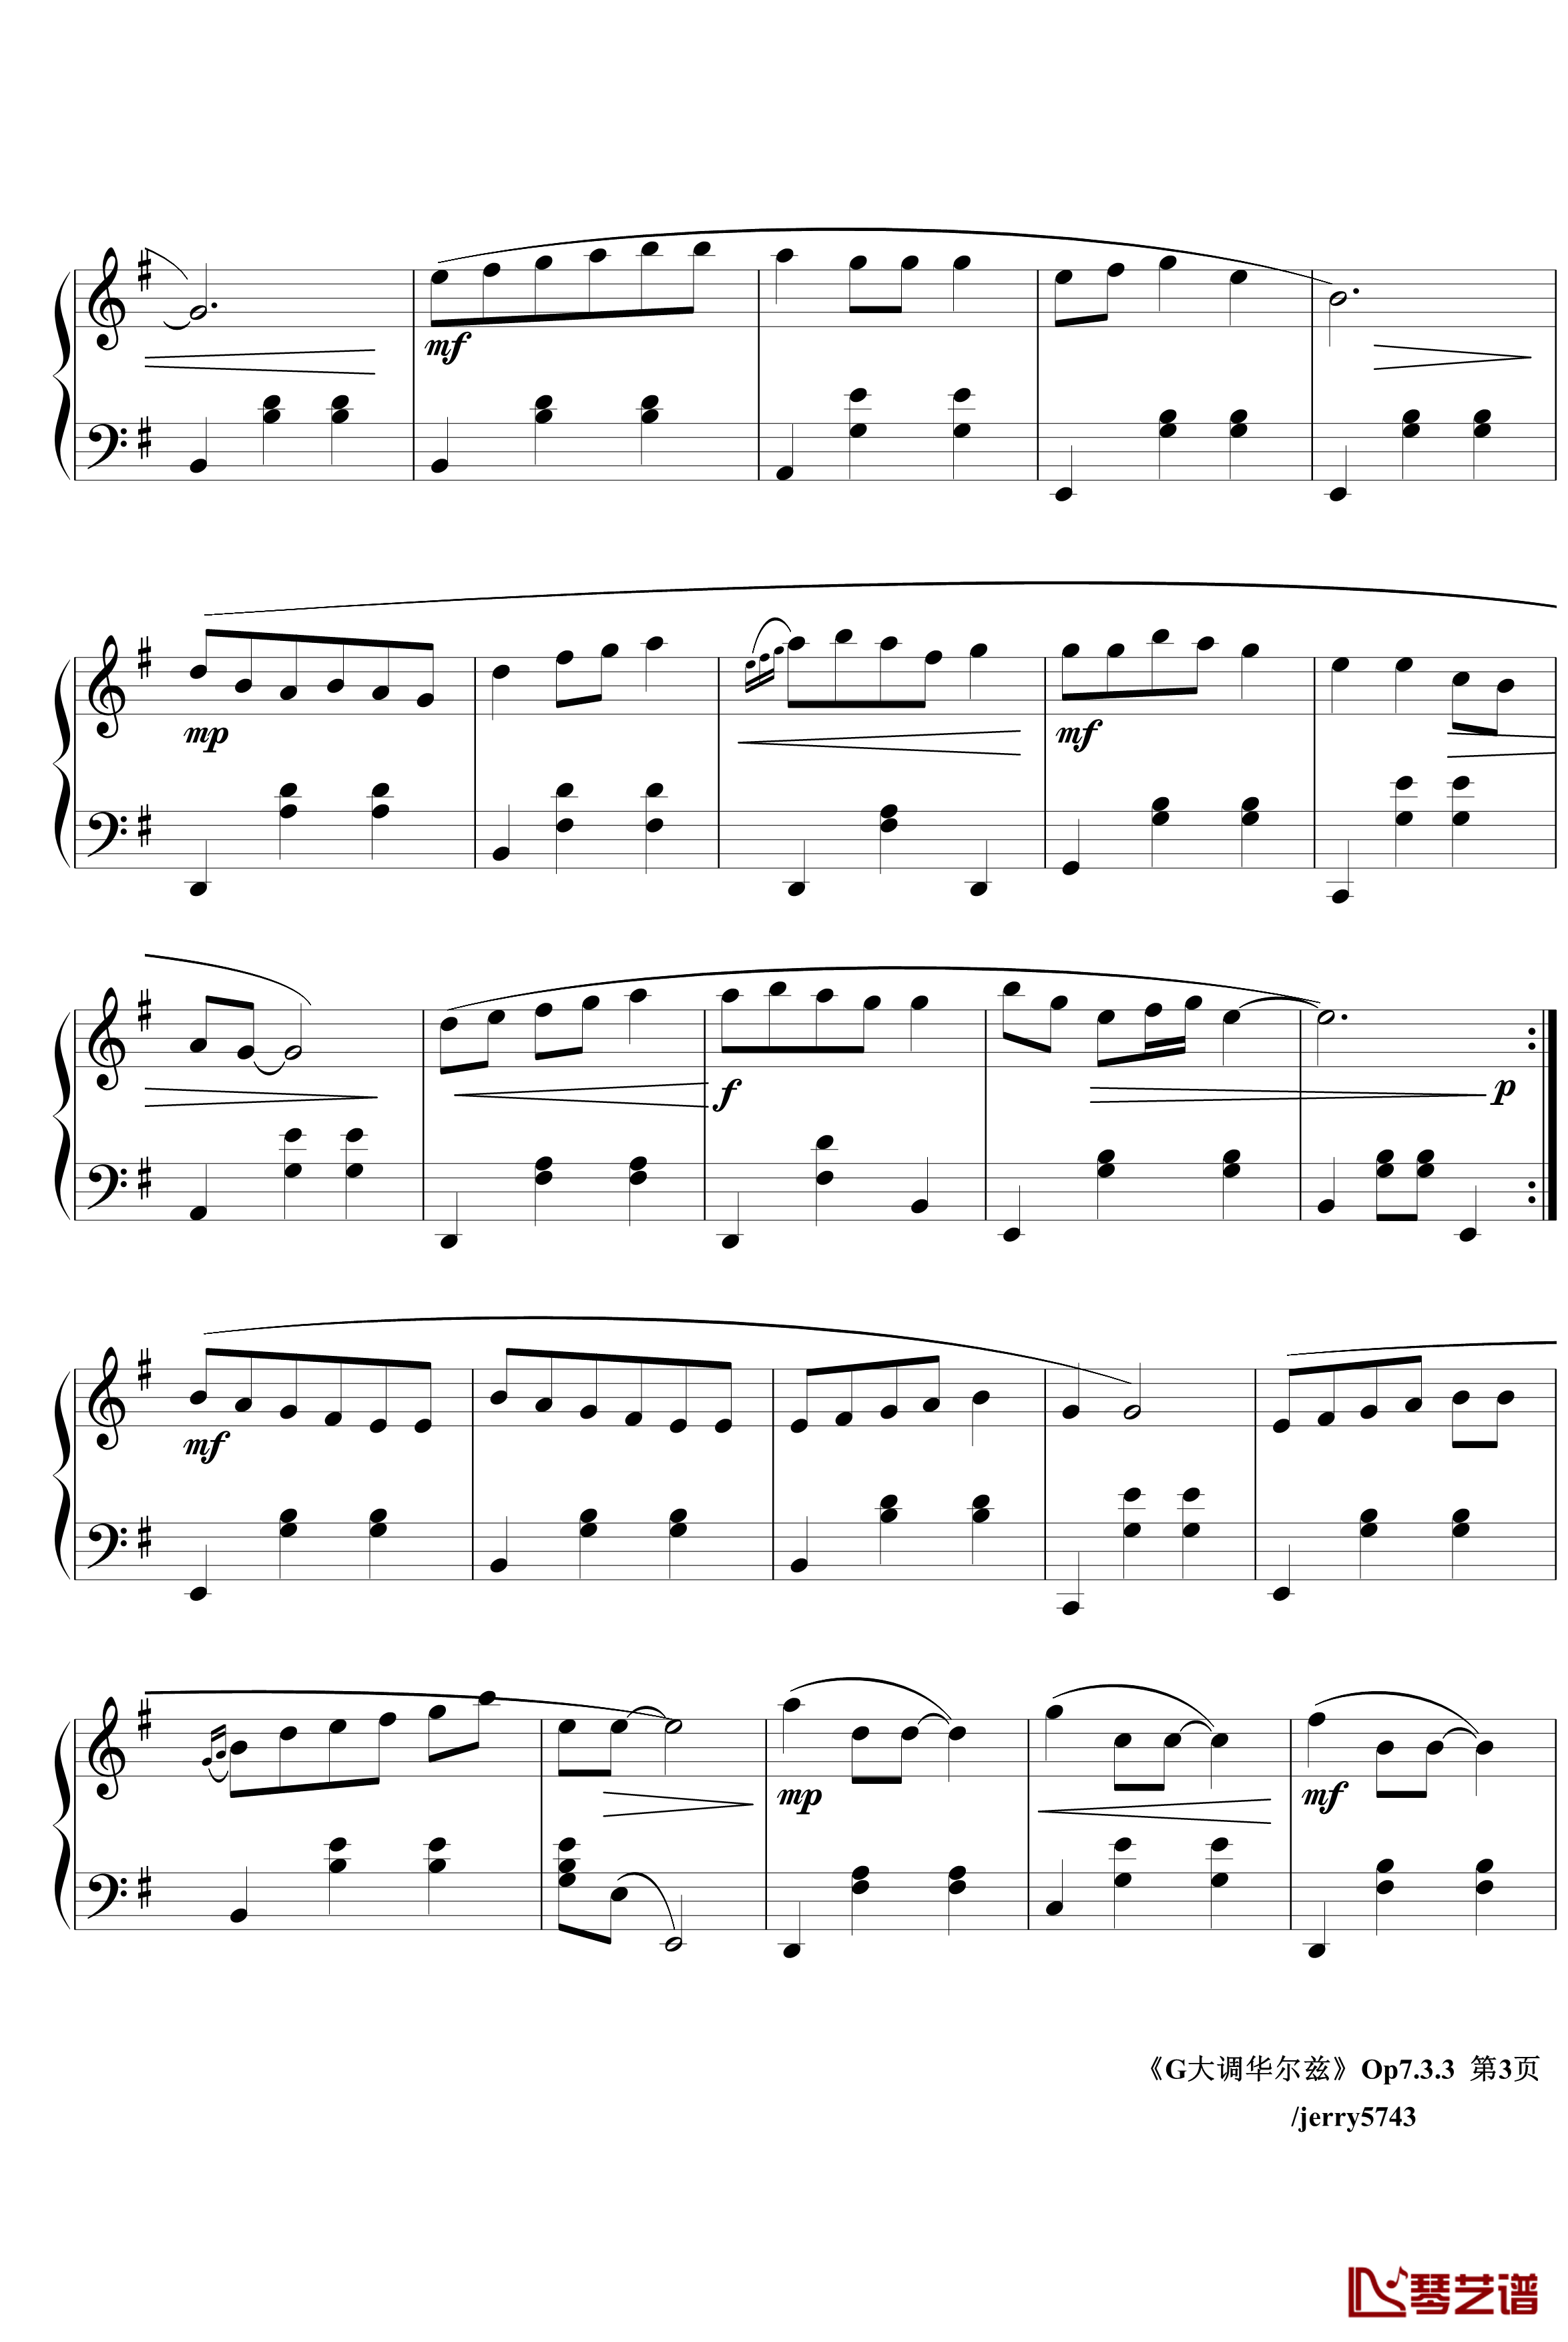 G大调华尔兹Op7.3.3钢琴谱-jerry57433